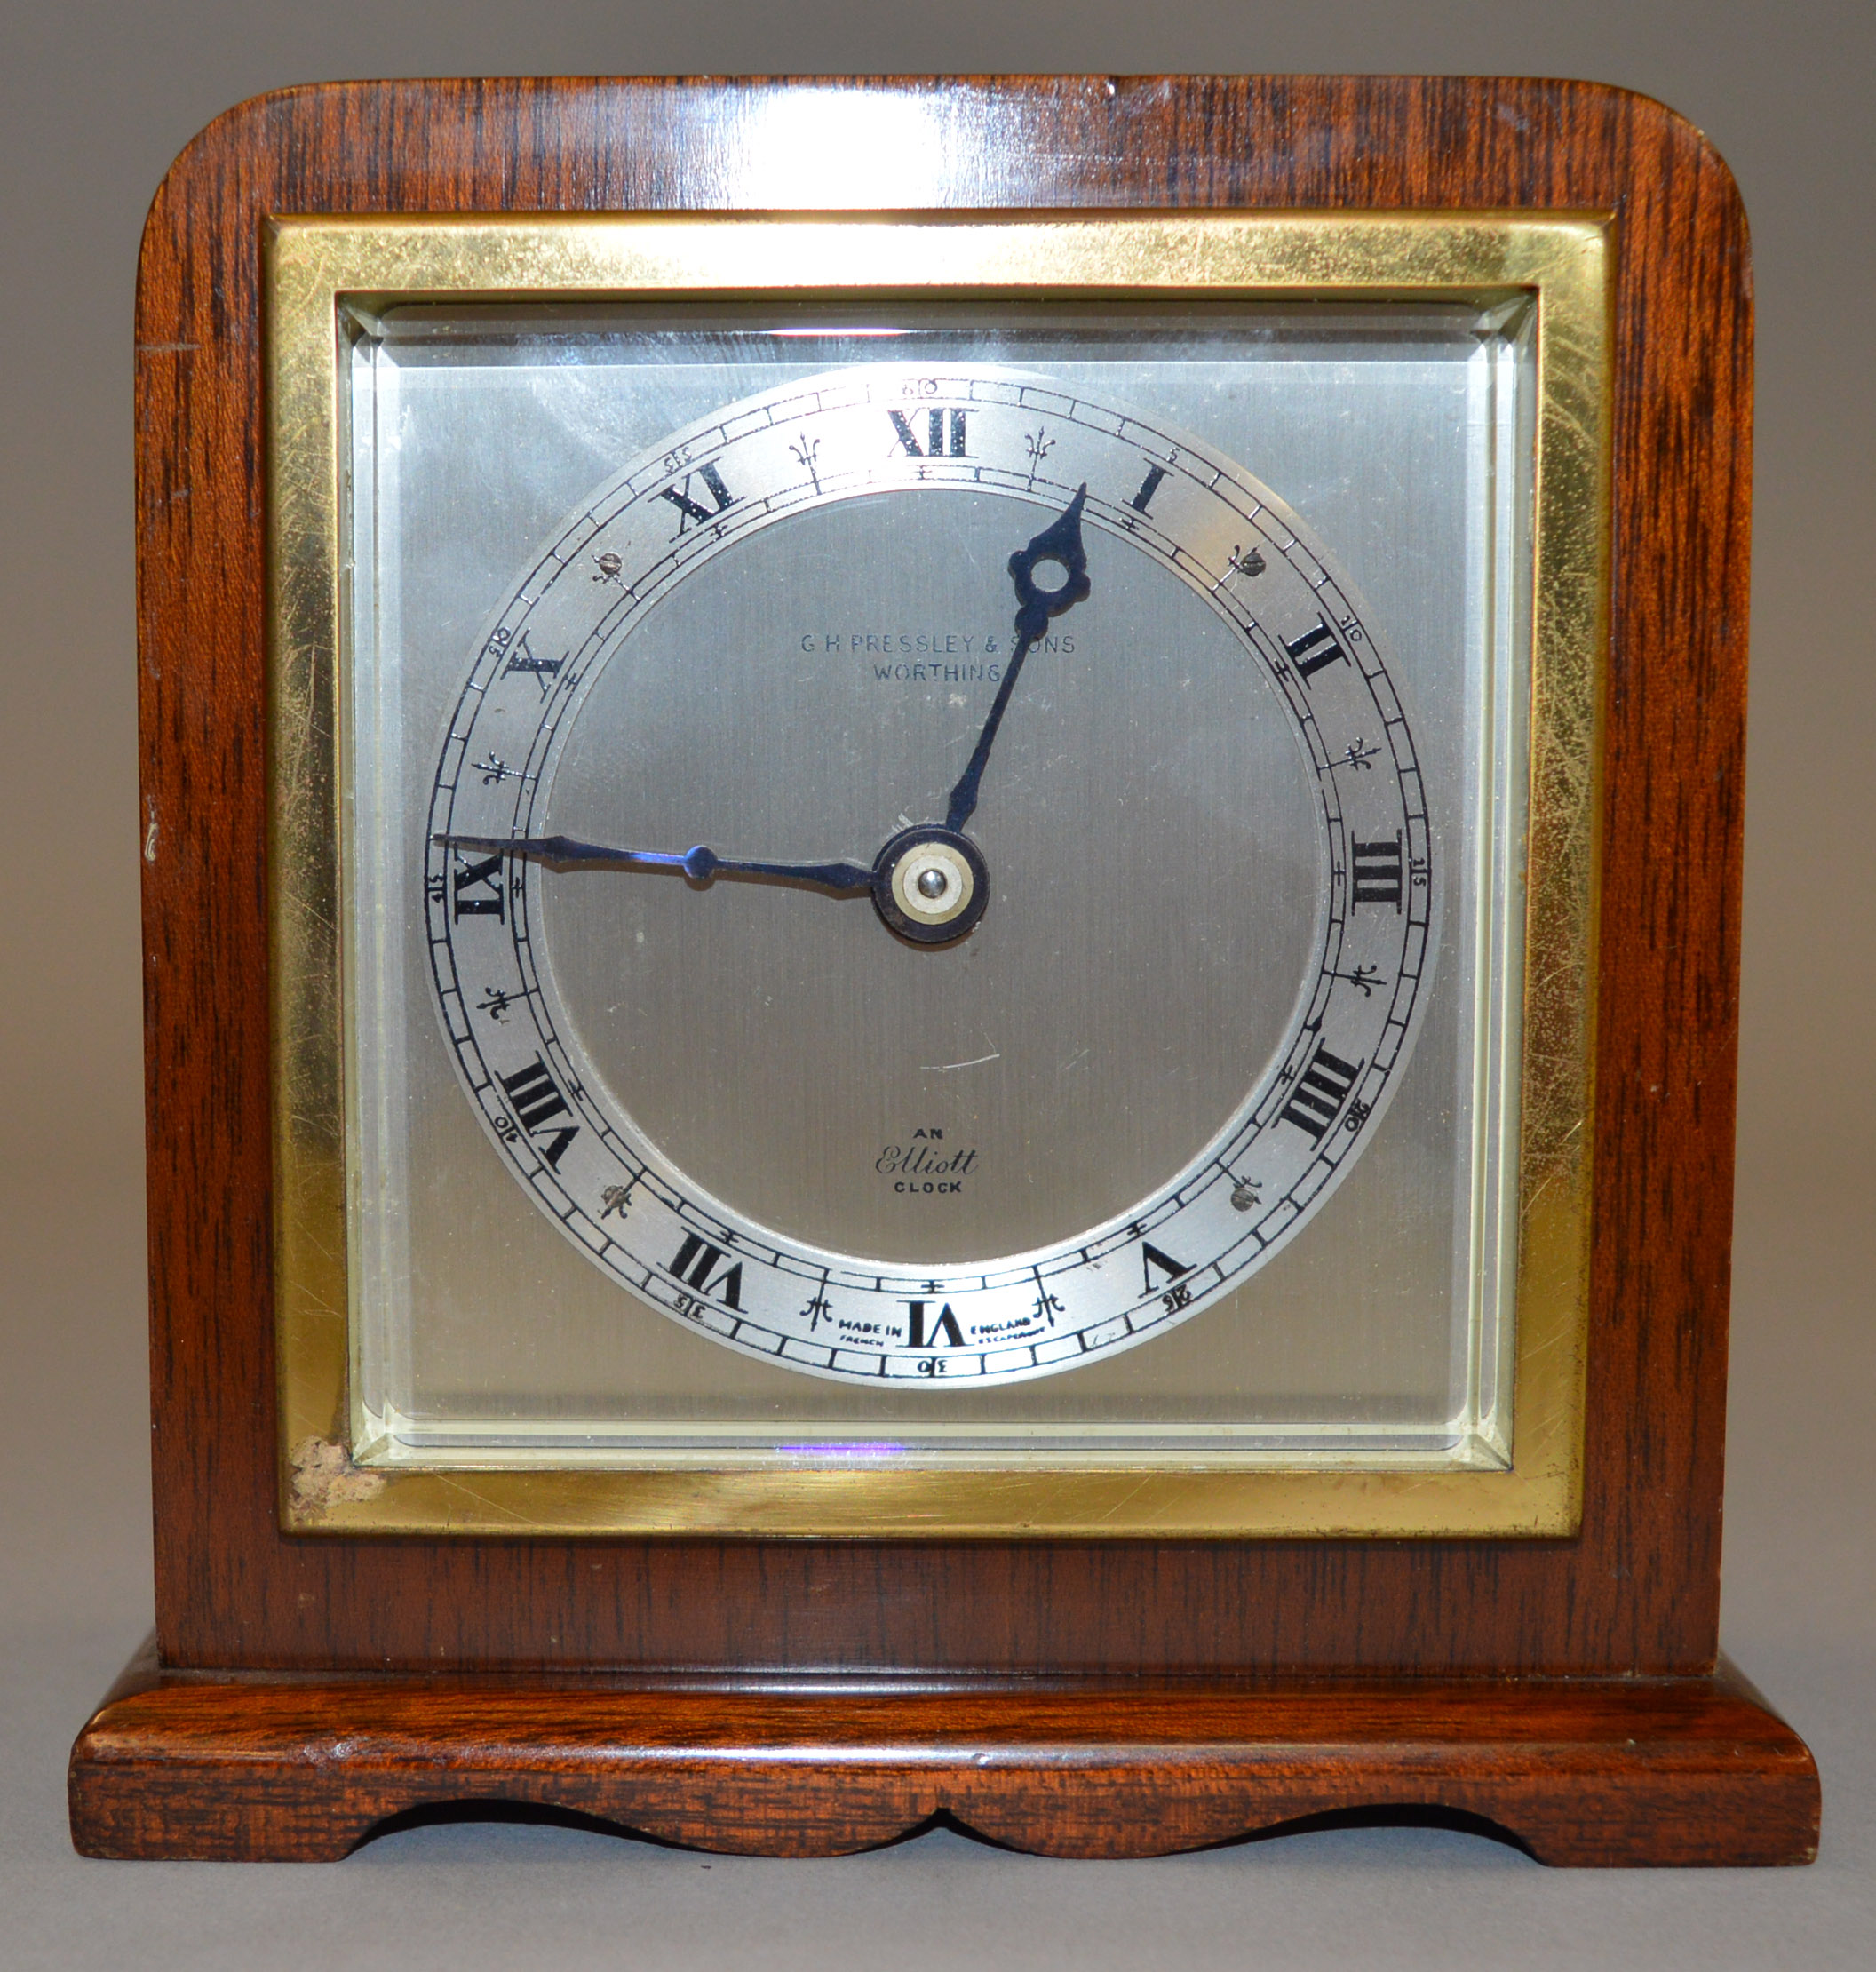 G. H. Pressley & Sons Worthing Elliott bracket clock.